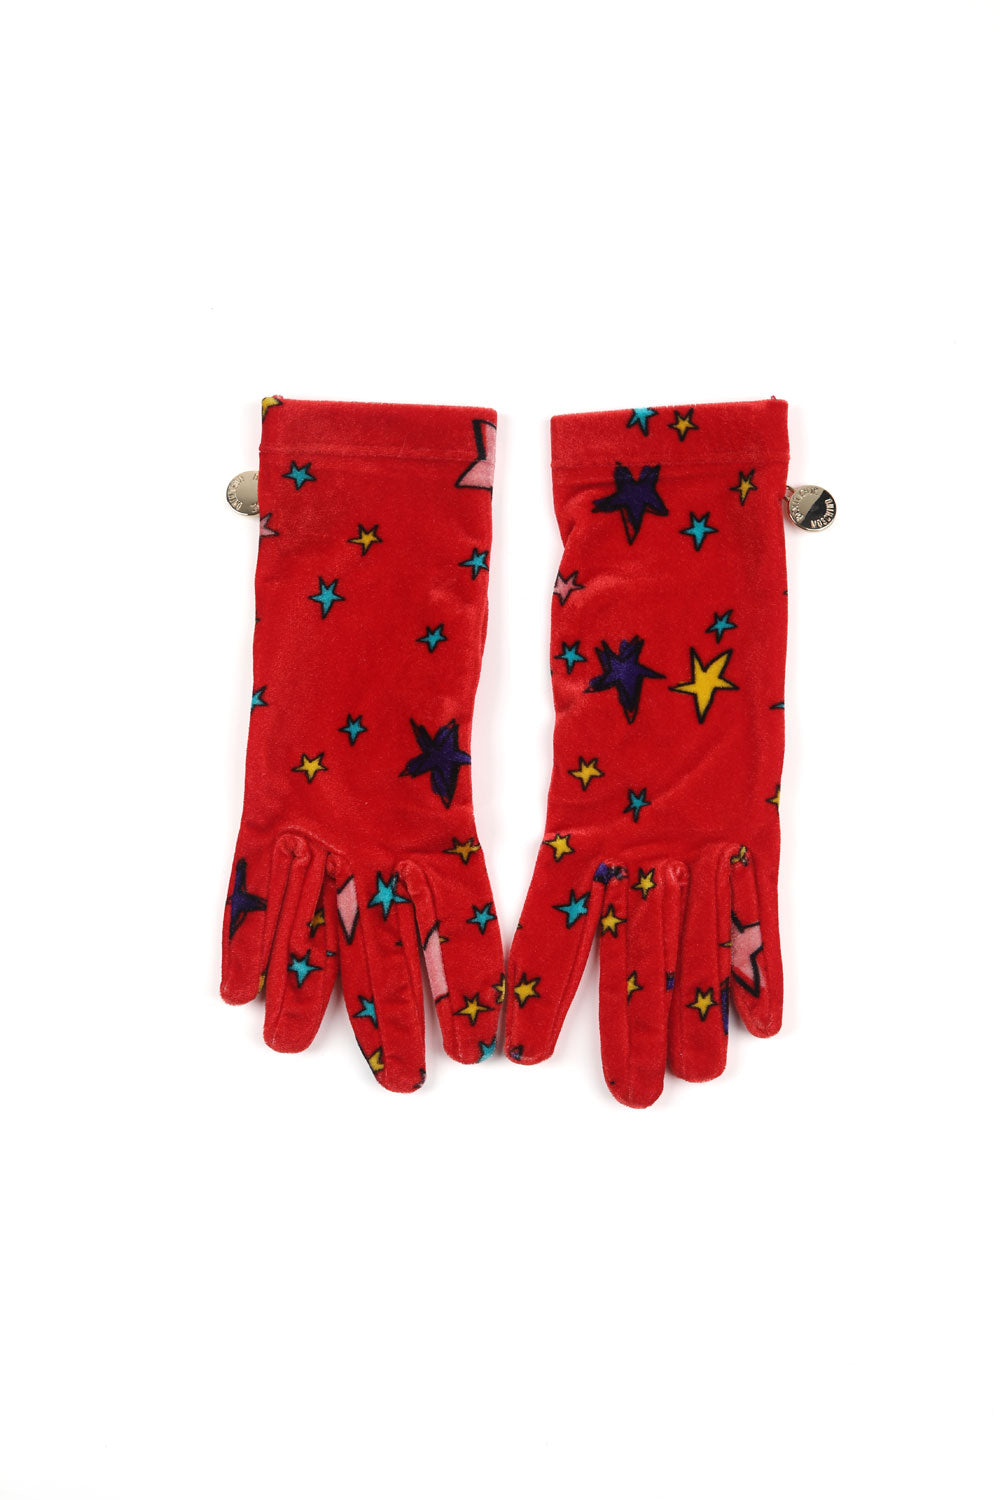 Boutique Moschino Starlight Velour Gloves